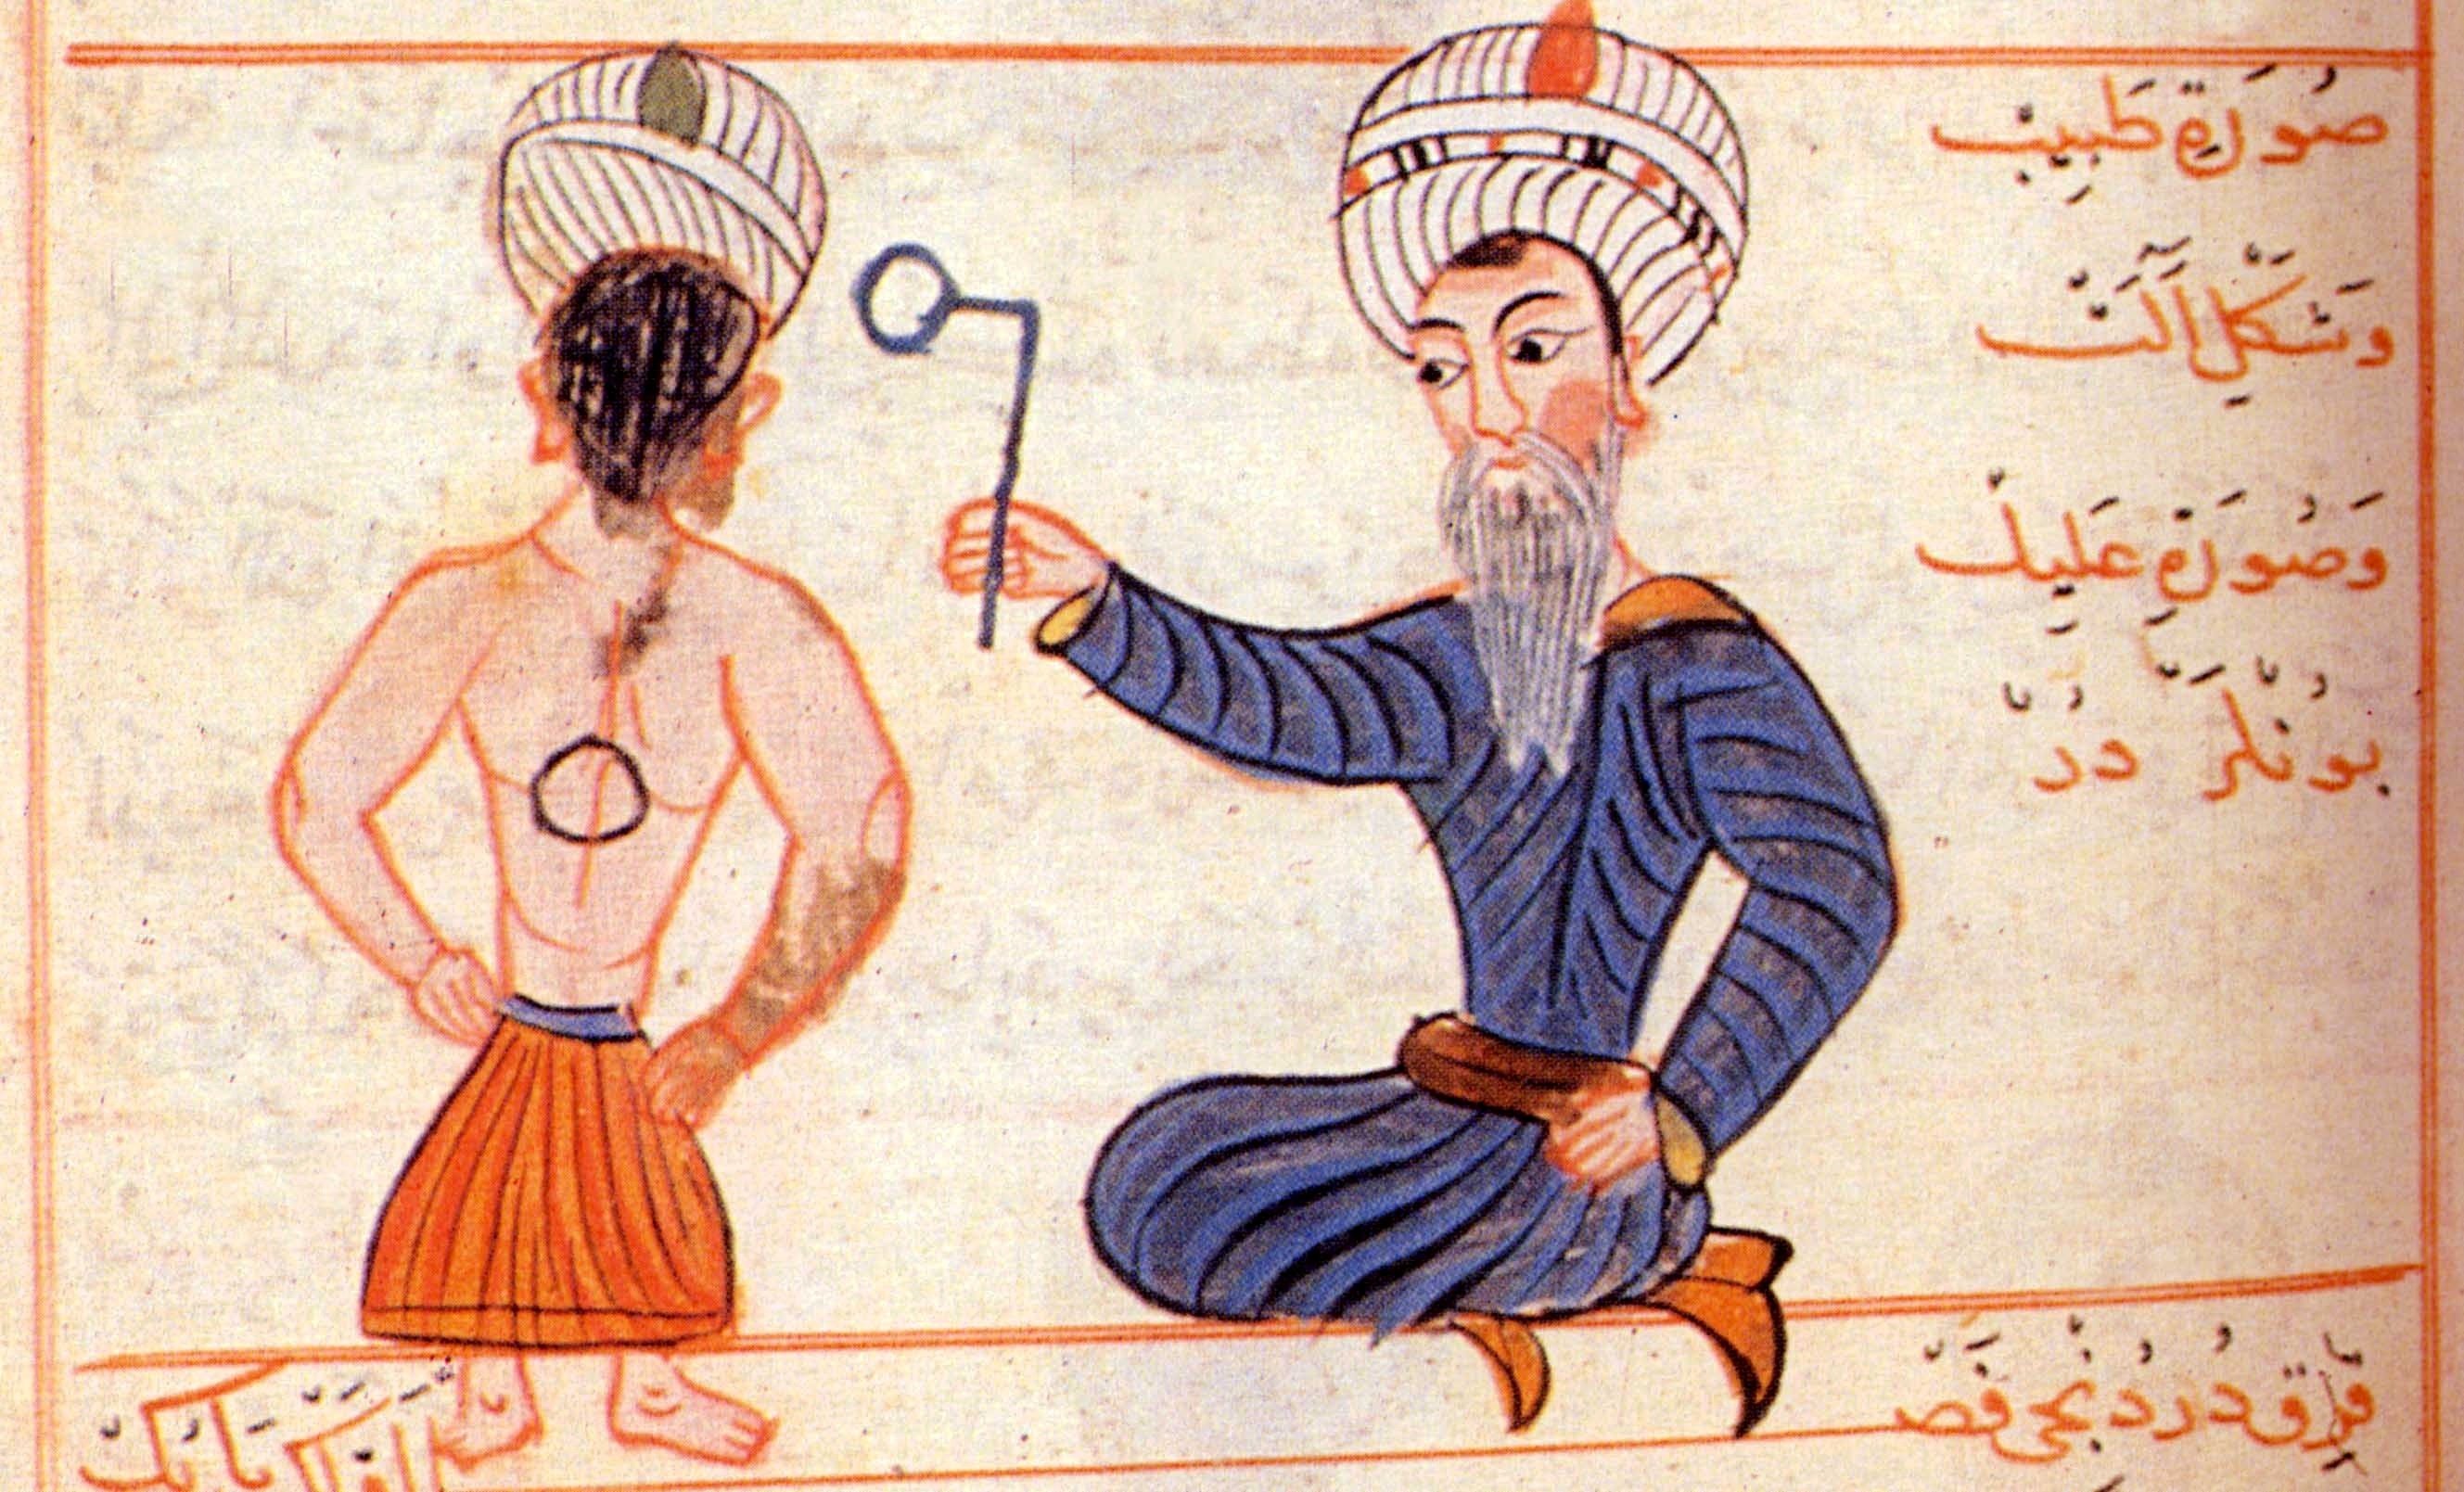 An illustration by Şerafeddin Sabuncuoğlu depicting a treatment method with branding iron.